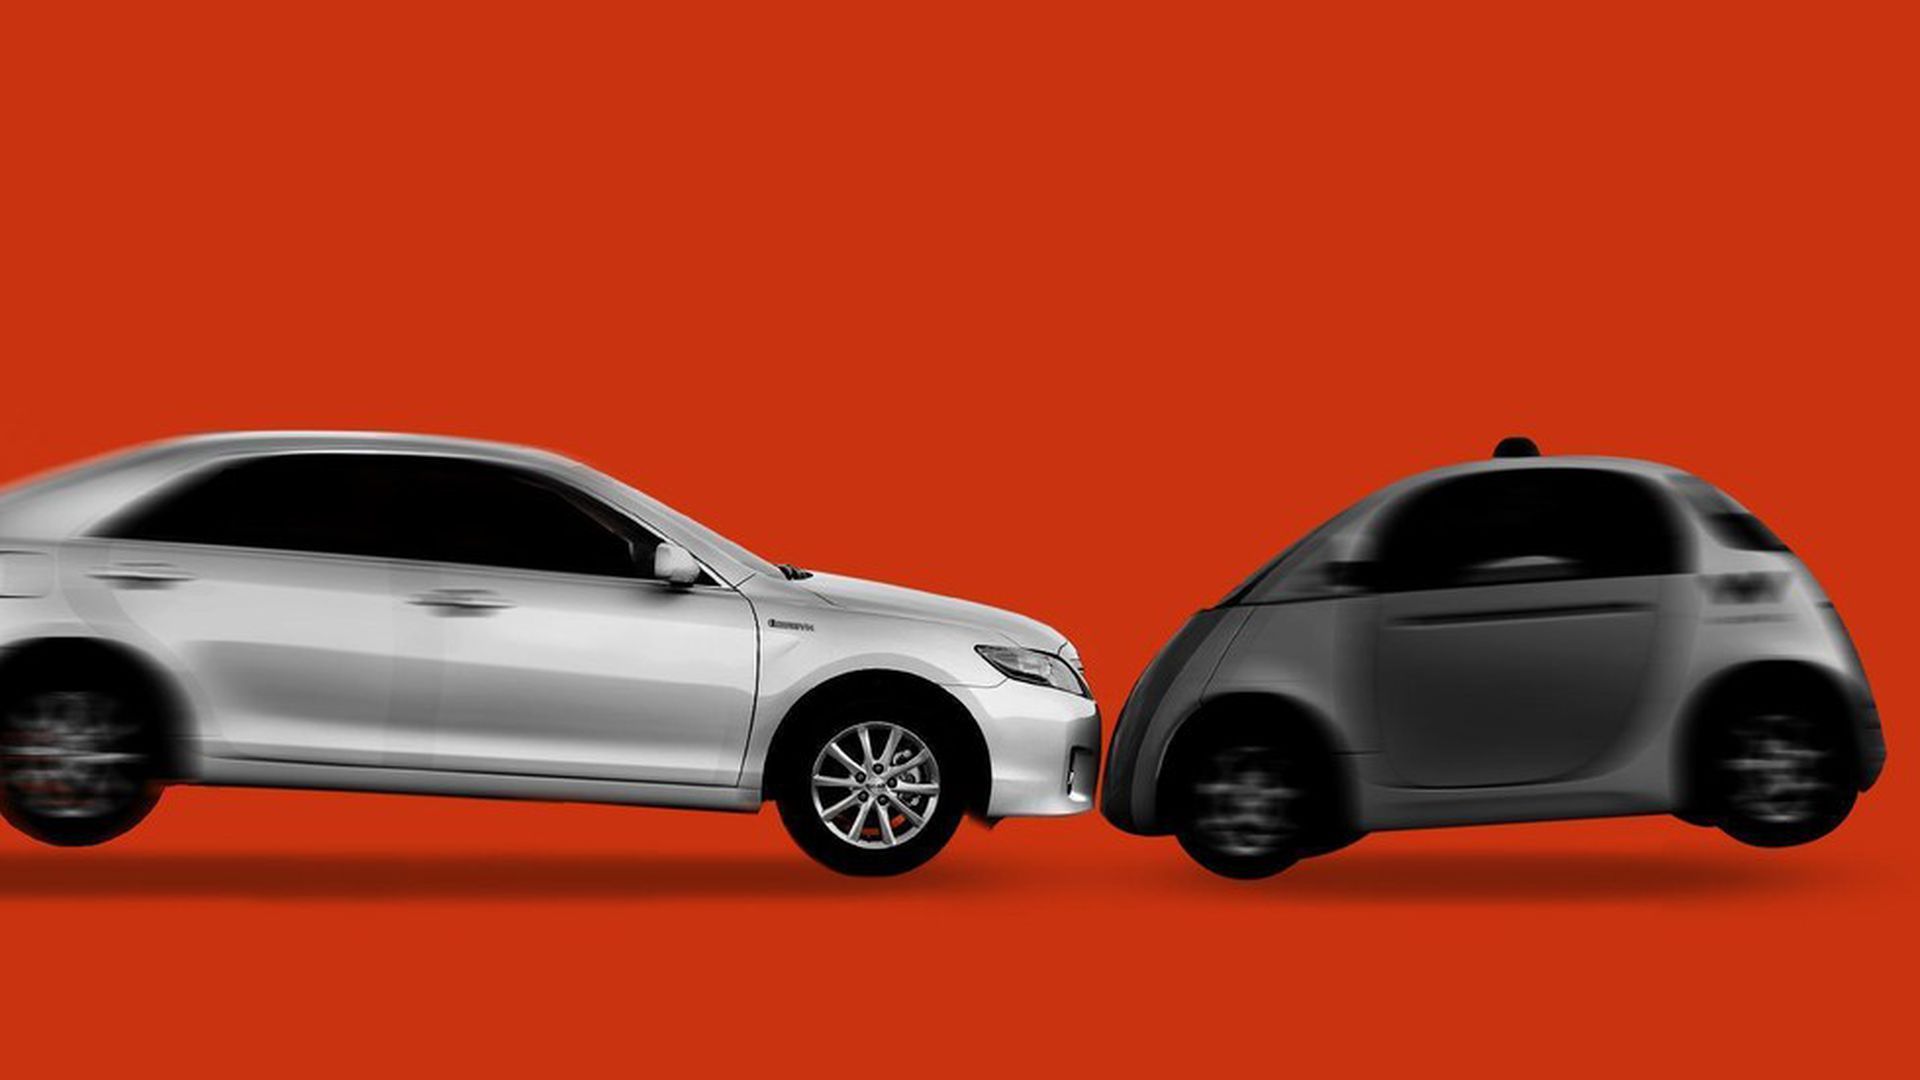 An illustration of a Waymo car colliding with an Uber